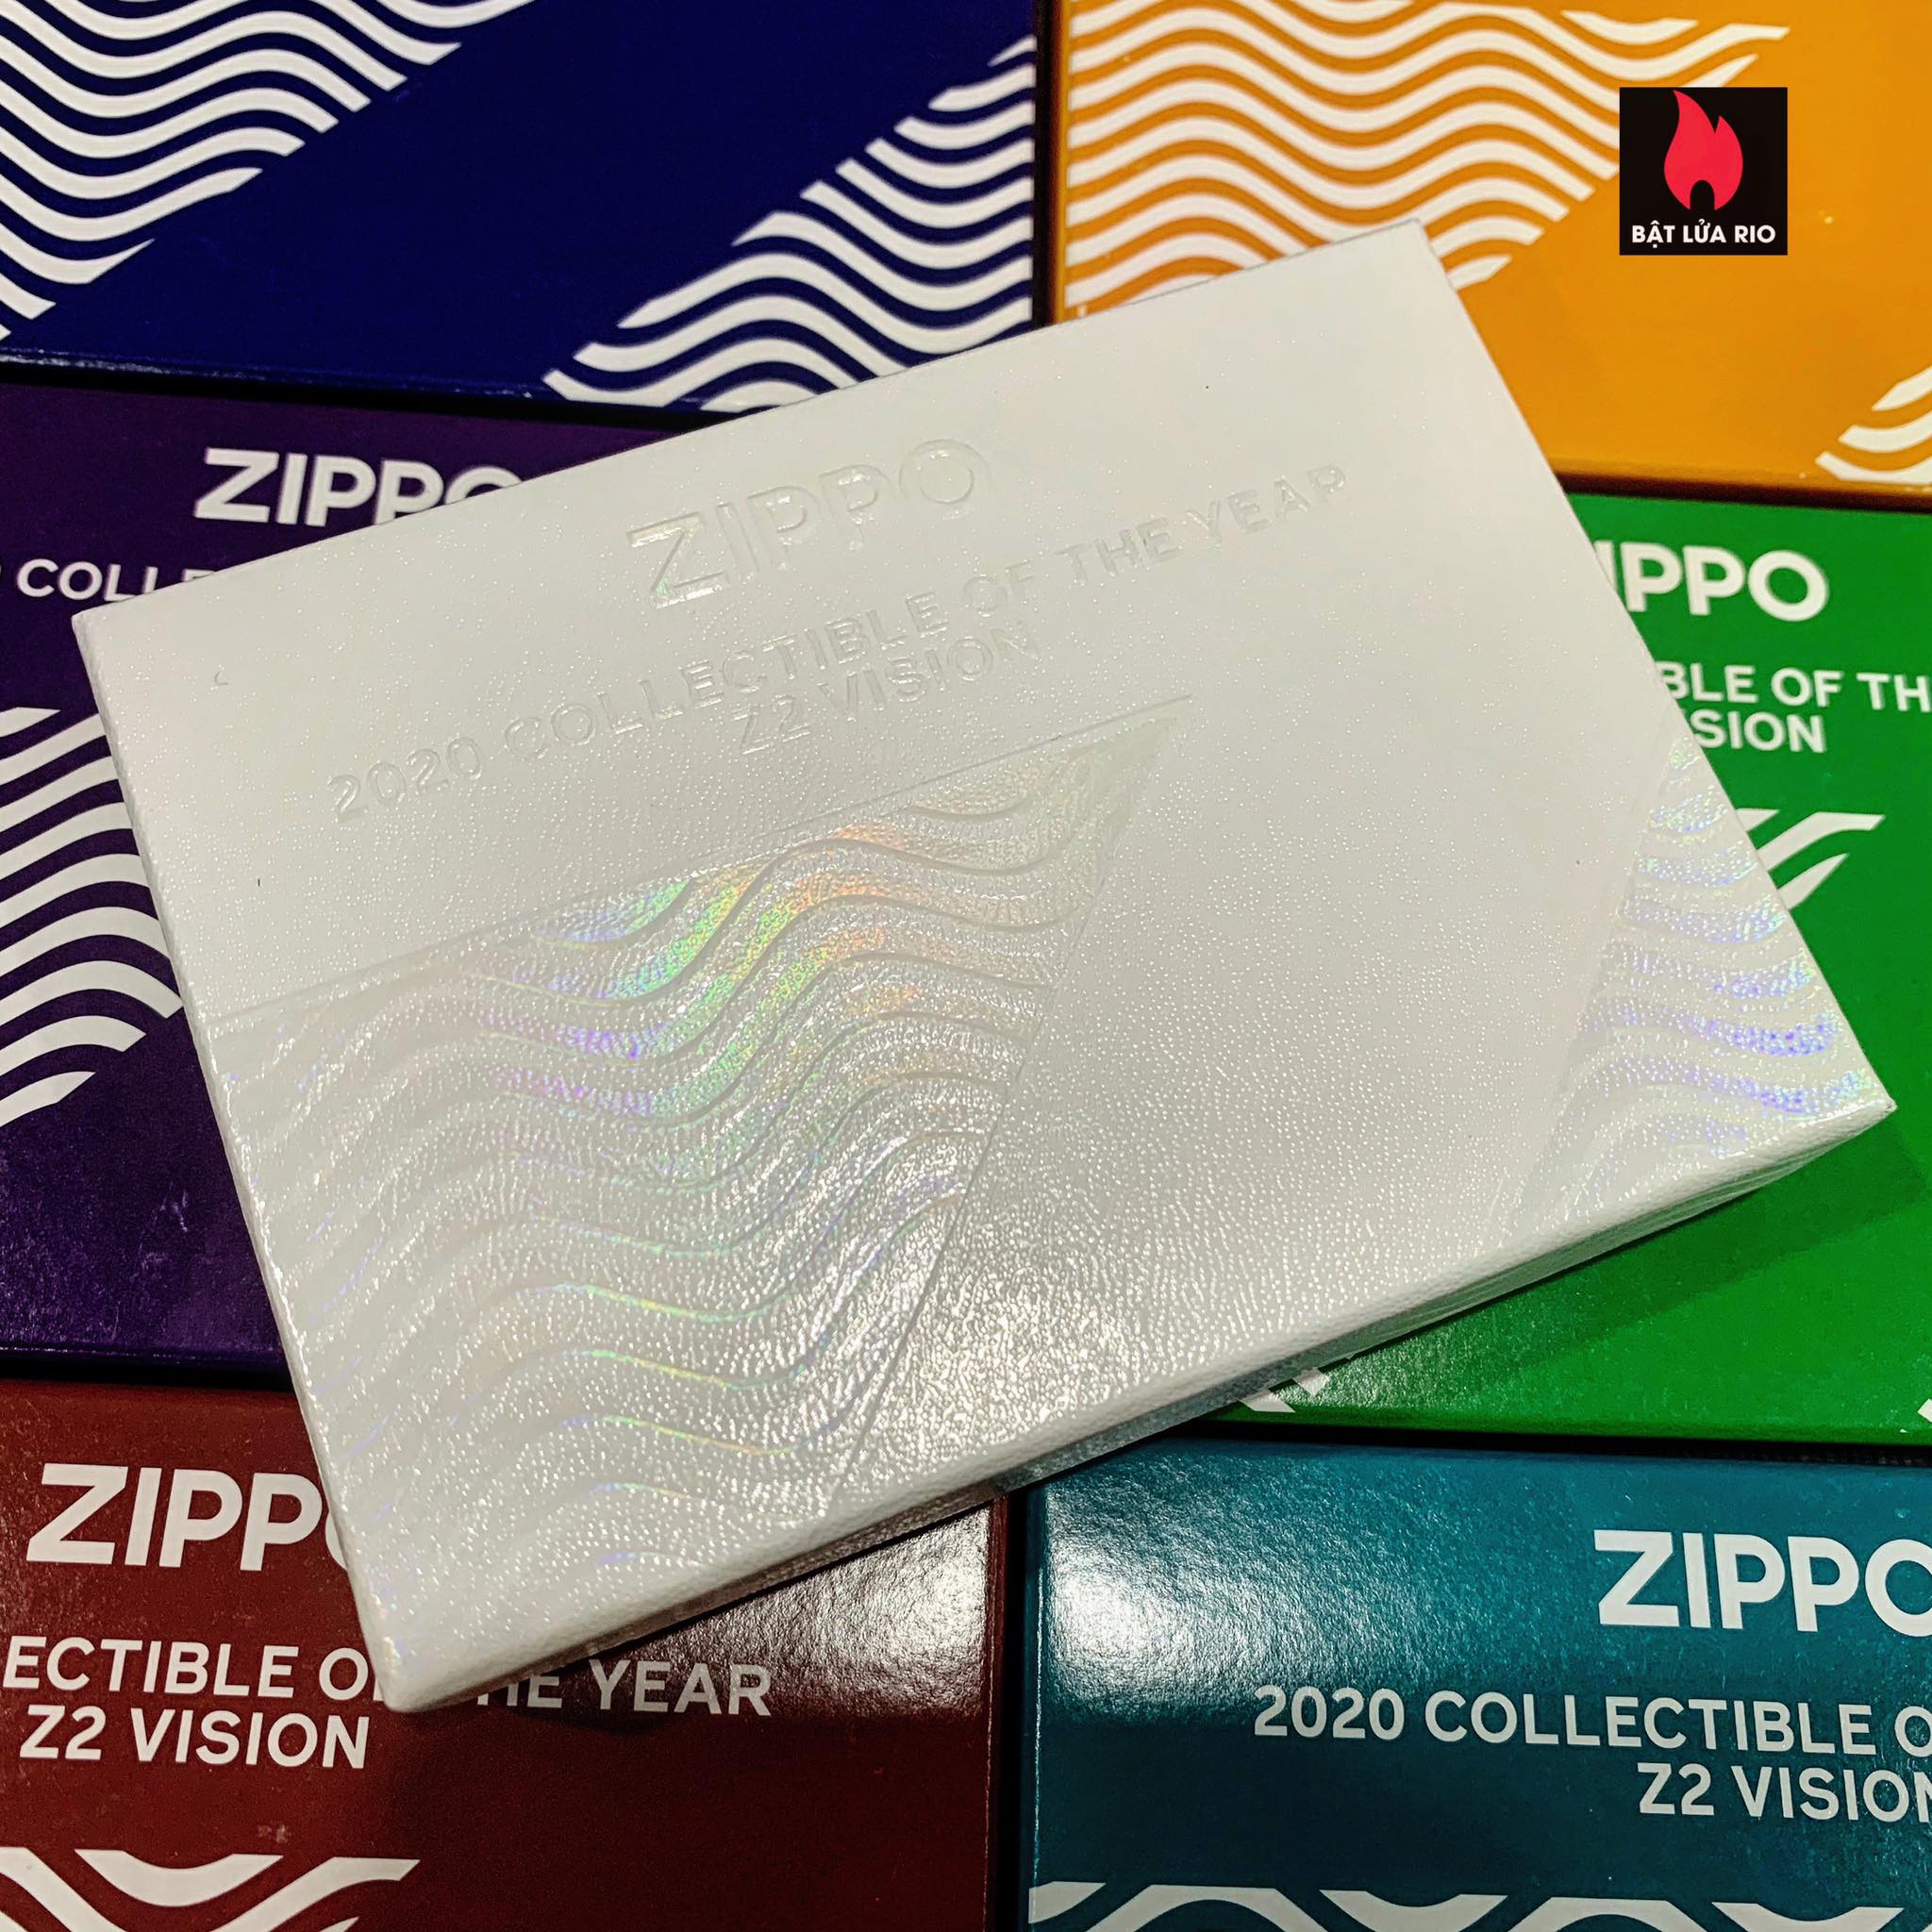 Zippo 49194 - Zippo 2020 Collectible Of The Year - Zippo Coty 2020 - Zippo Z2 Vision 21